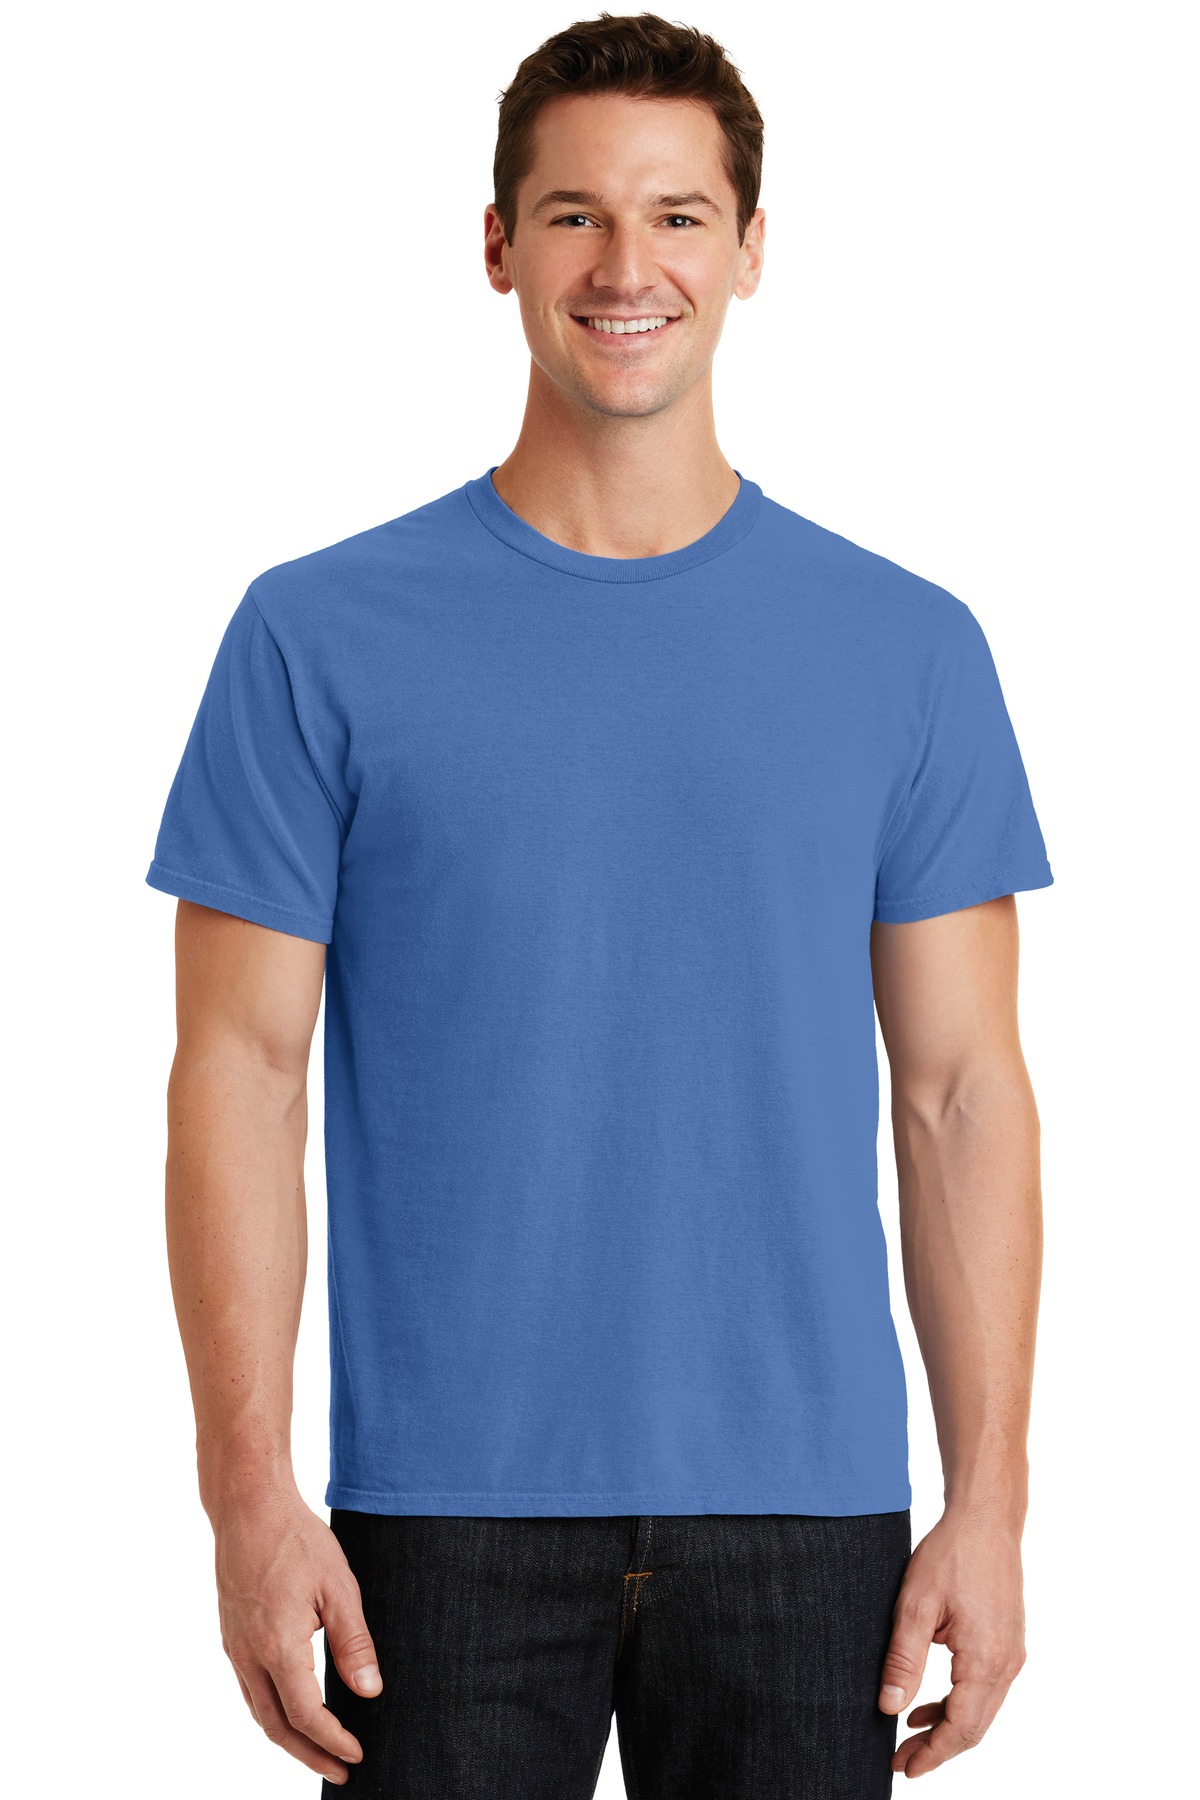 Port & Company Hospitality T-Shirts ® Beach Wash Garment-Dyed Tee.-Port & Company